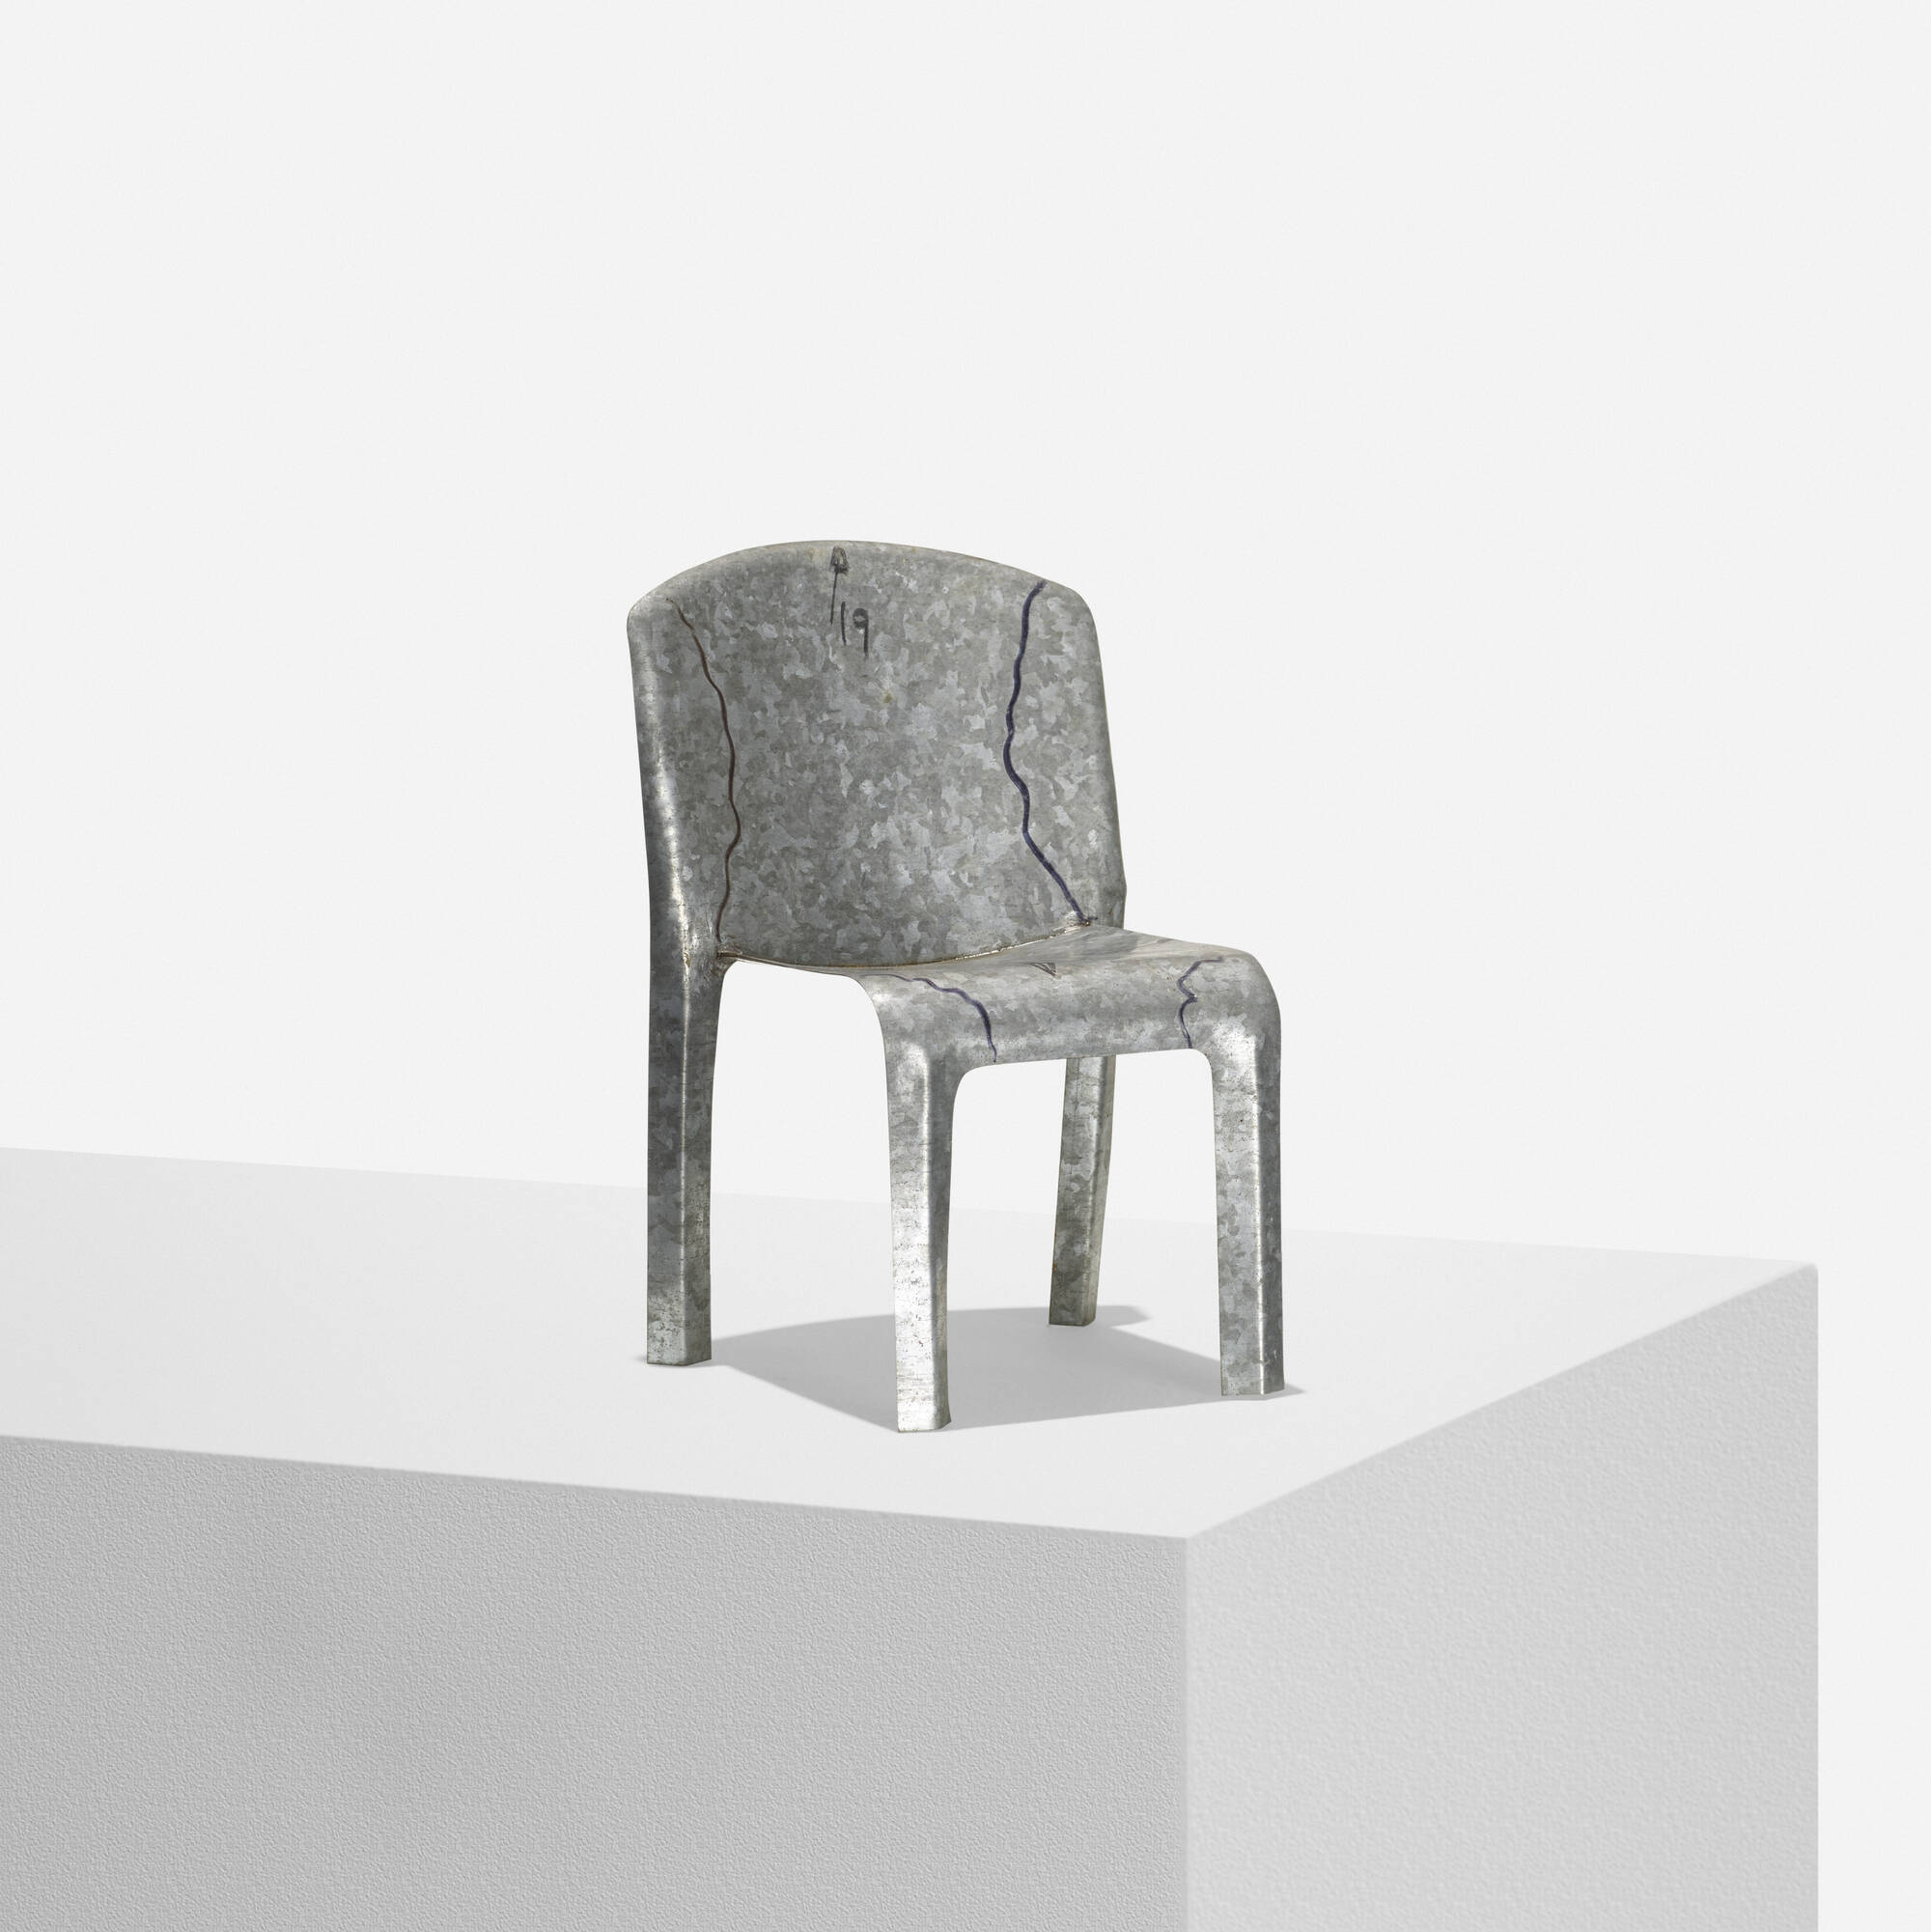 133 Richard Schultz Model For Sheet Metal Chair The Design